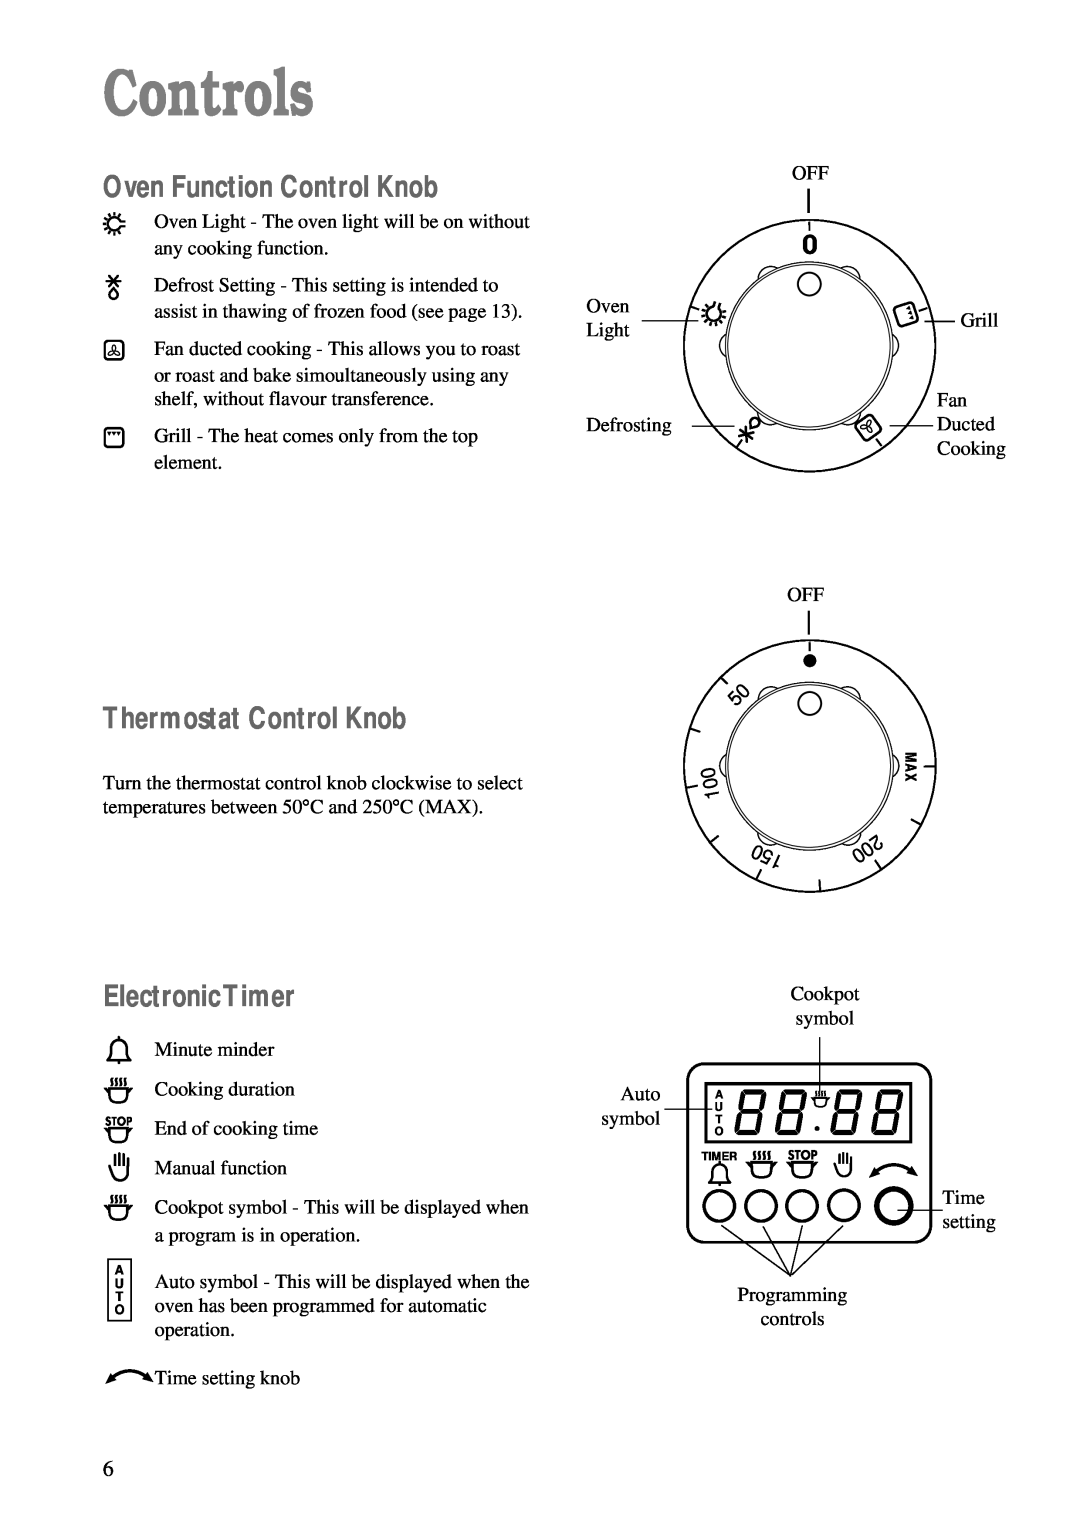 Zanussi ZBF 760 Controls, Oven Function Control Knob, Thermostat Control Knob, ElectronicTimer, Auto, symbol 